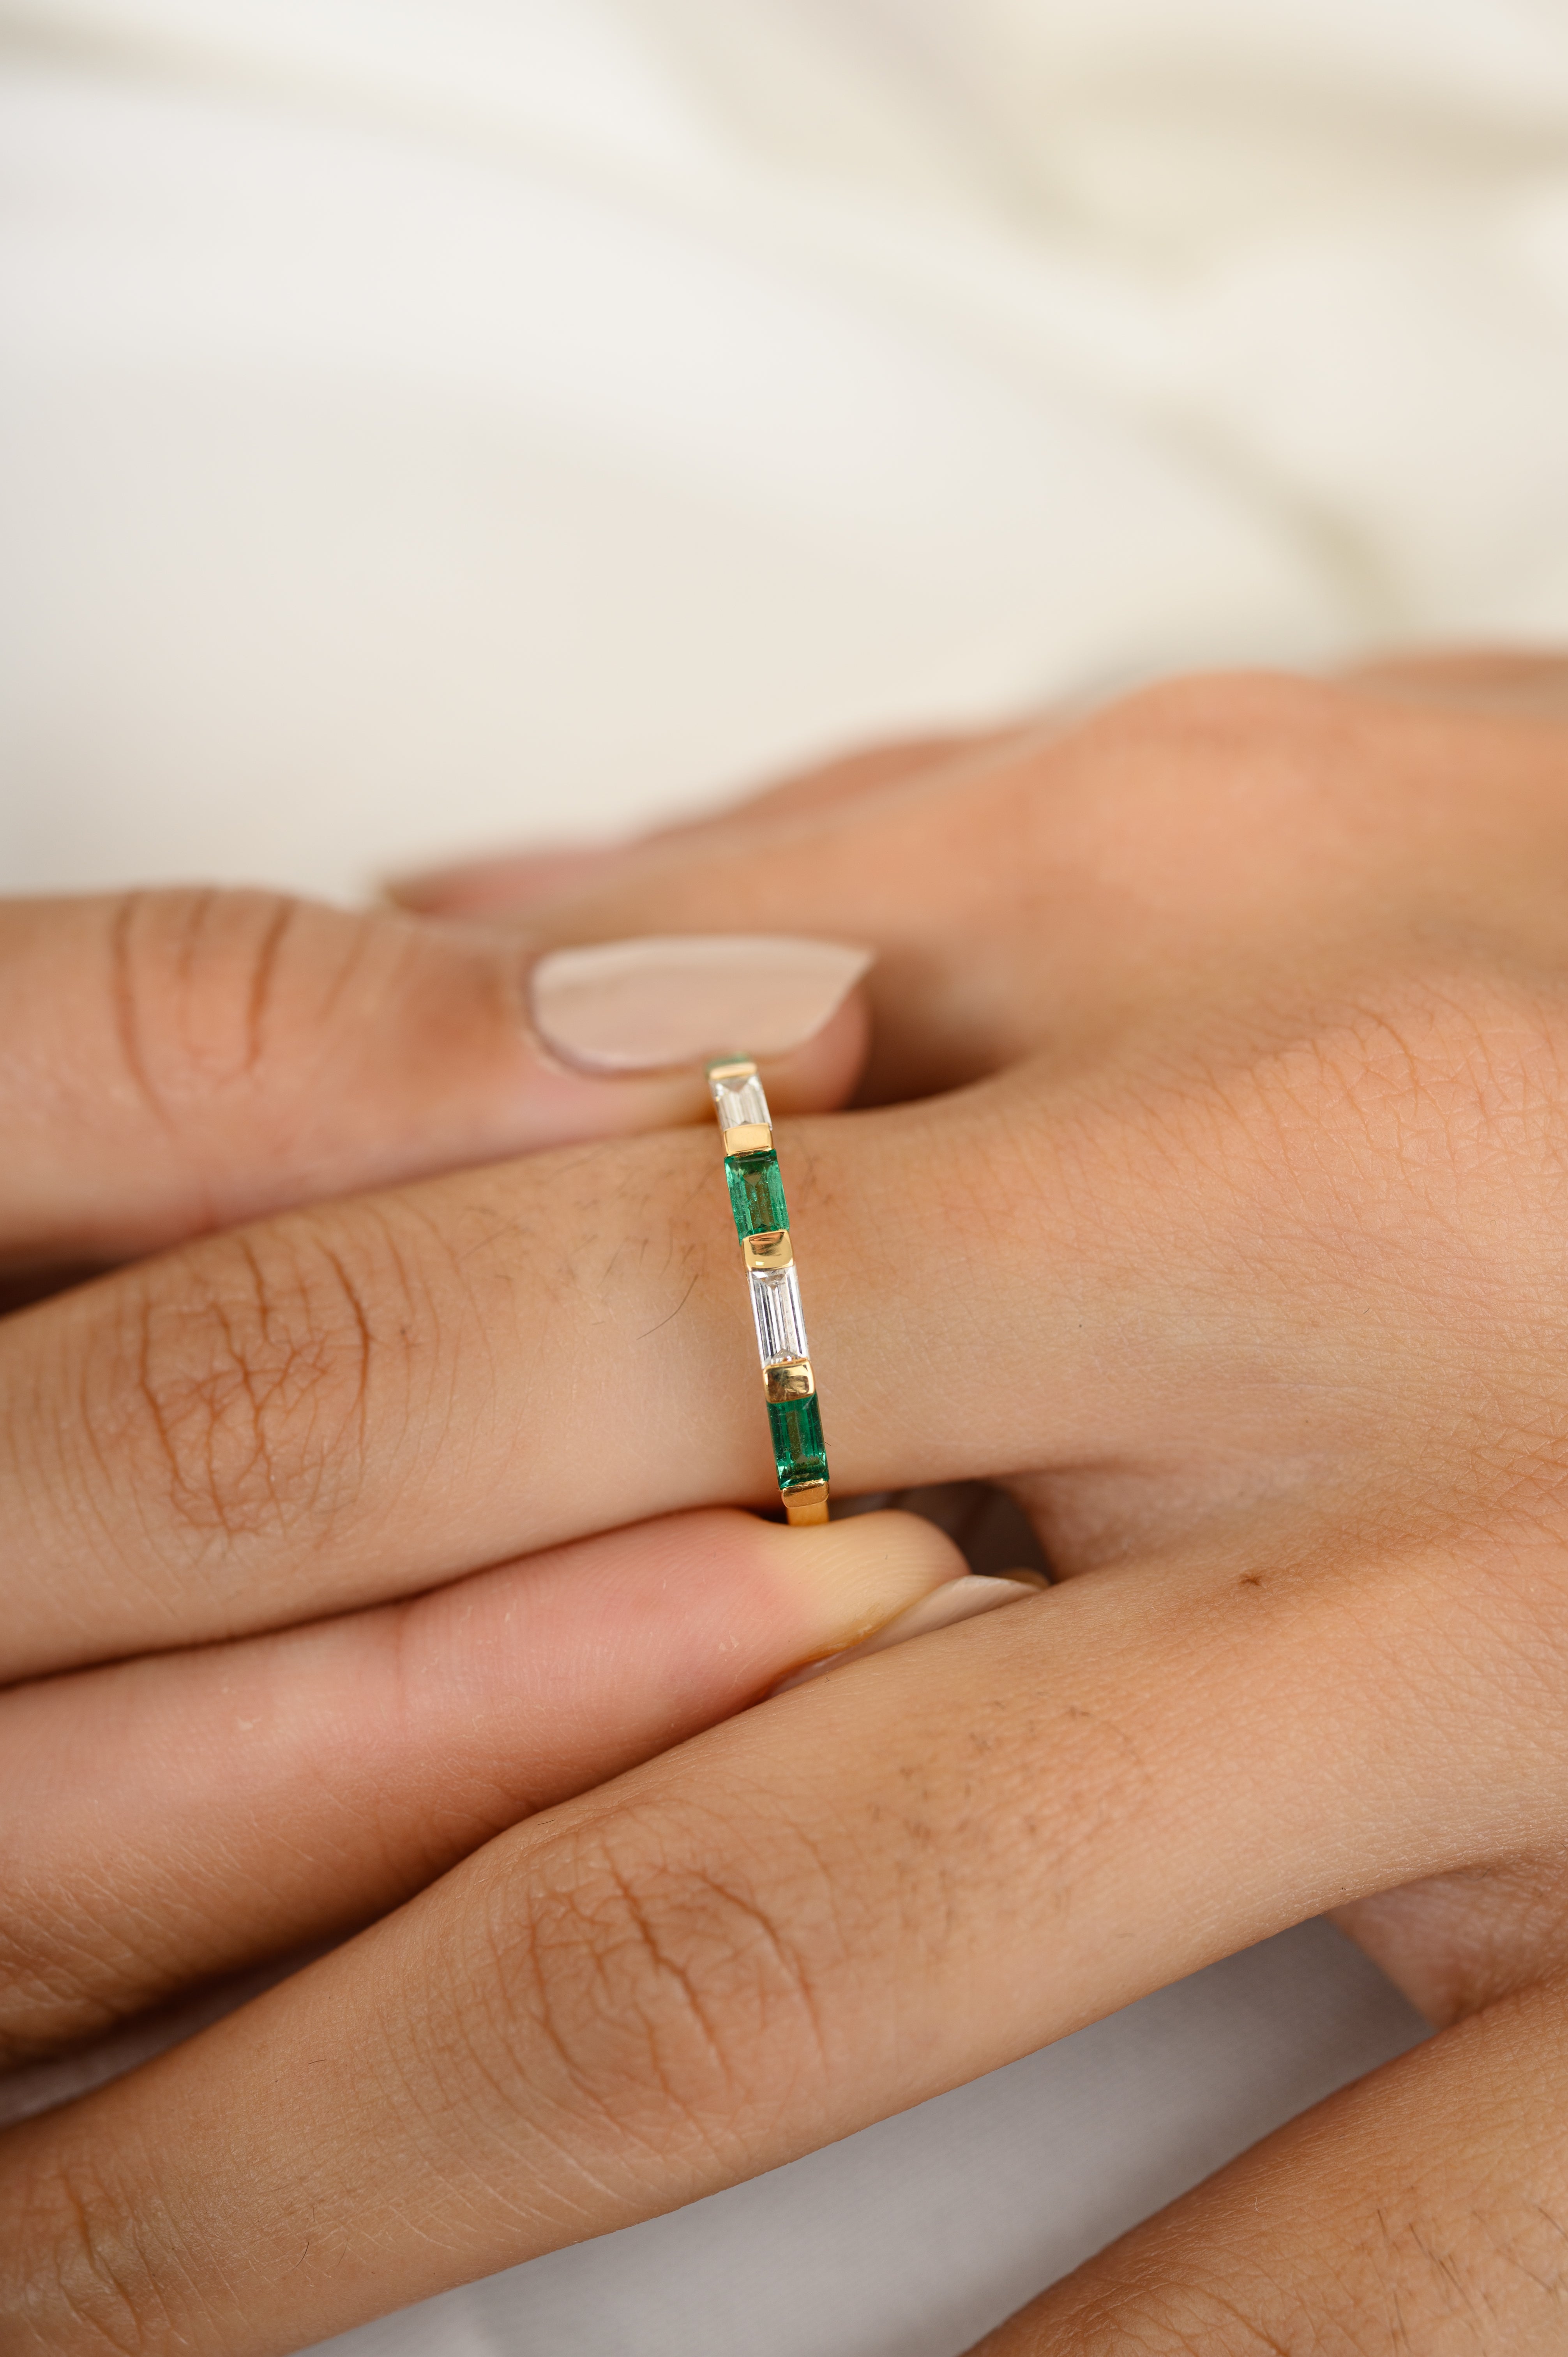 18K Solid Yellow Gold Emerald Diamond Band Ring